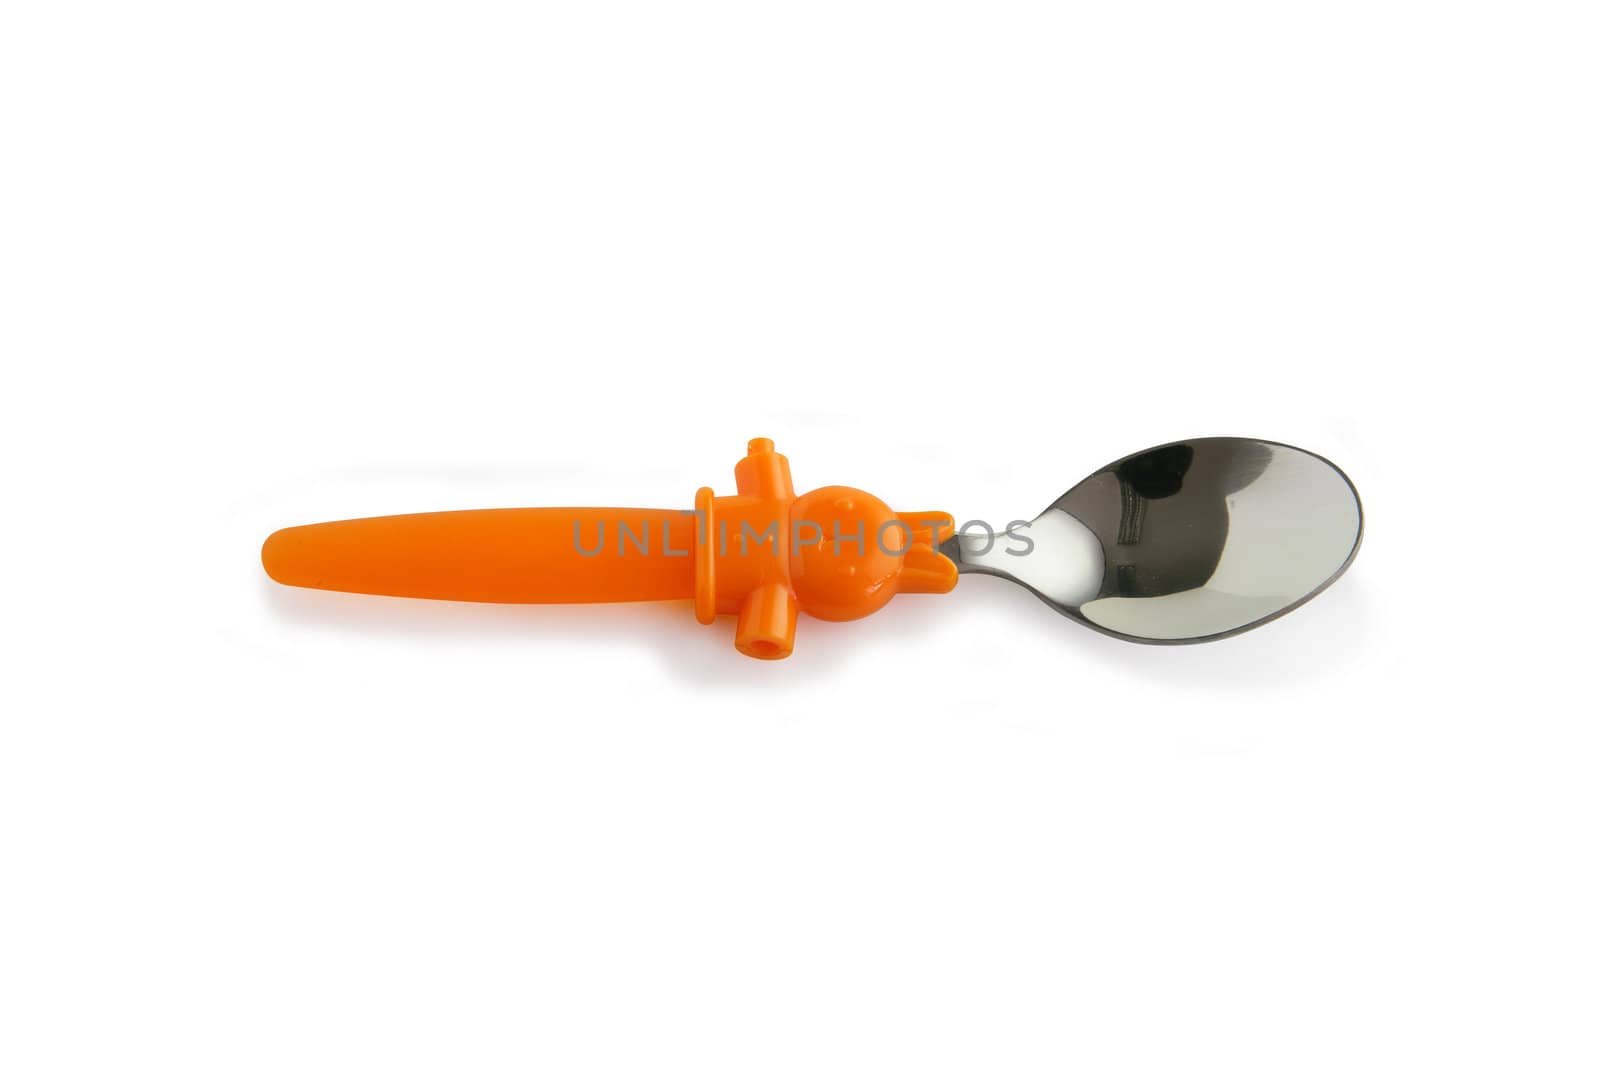 Silver spoon with orange plastic handle